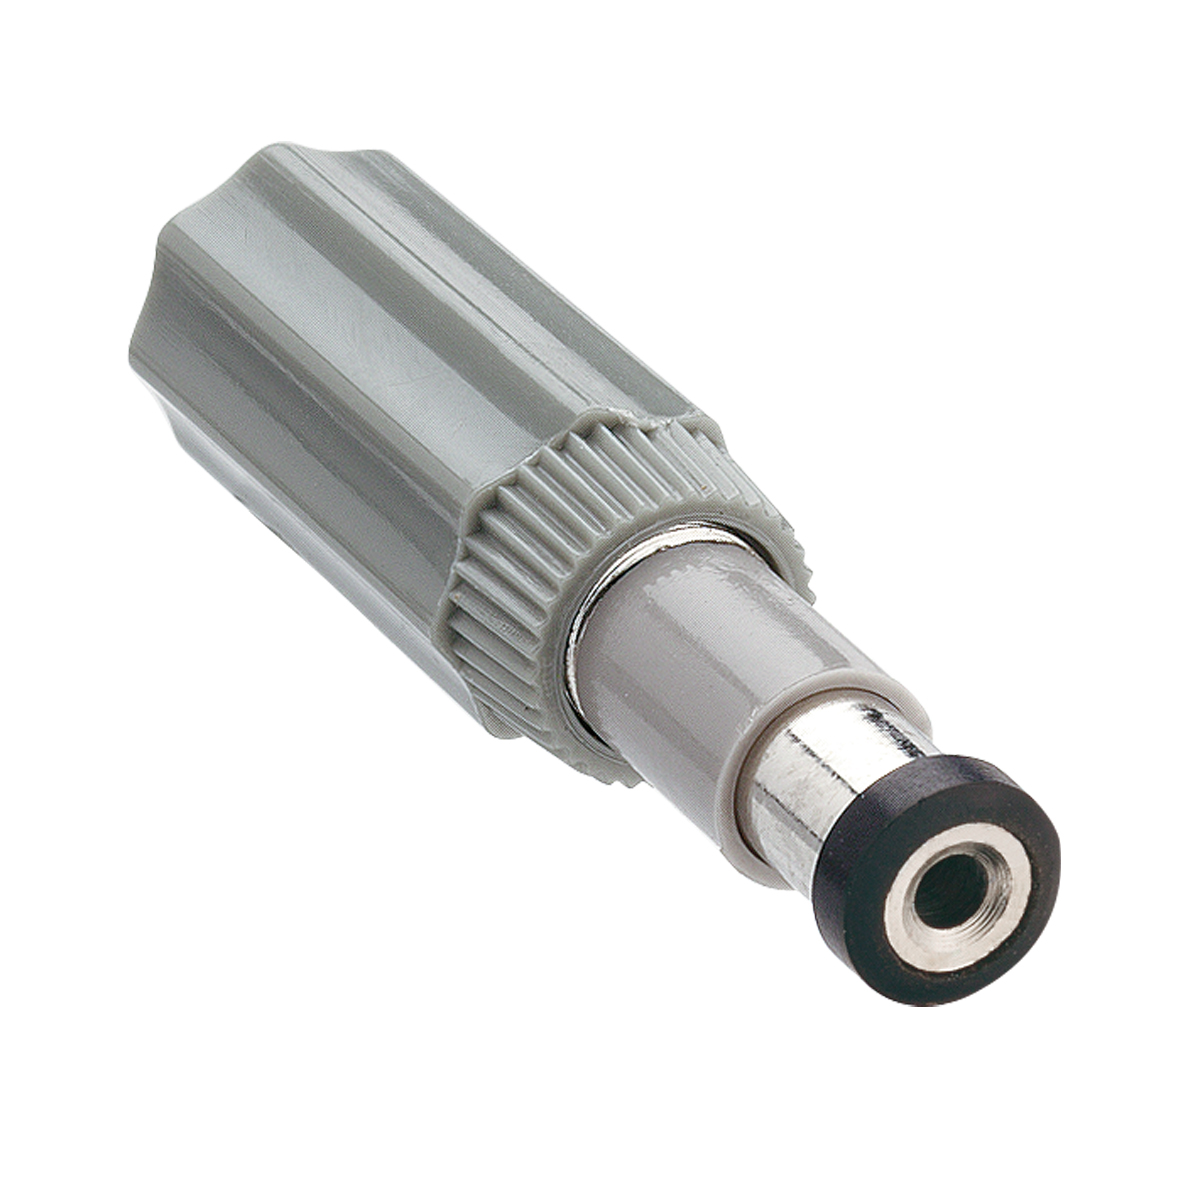 Lumberg: NES 1 (Series 16 | Power supply connectors)